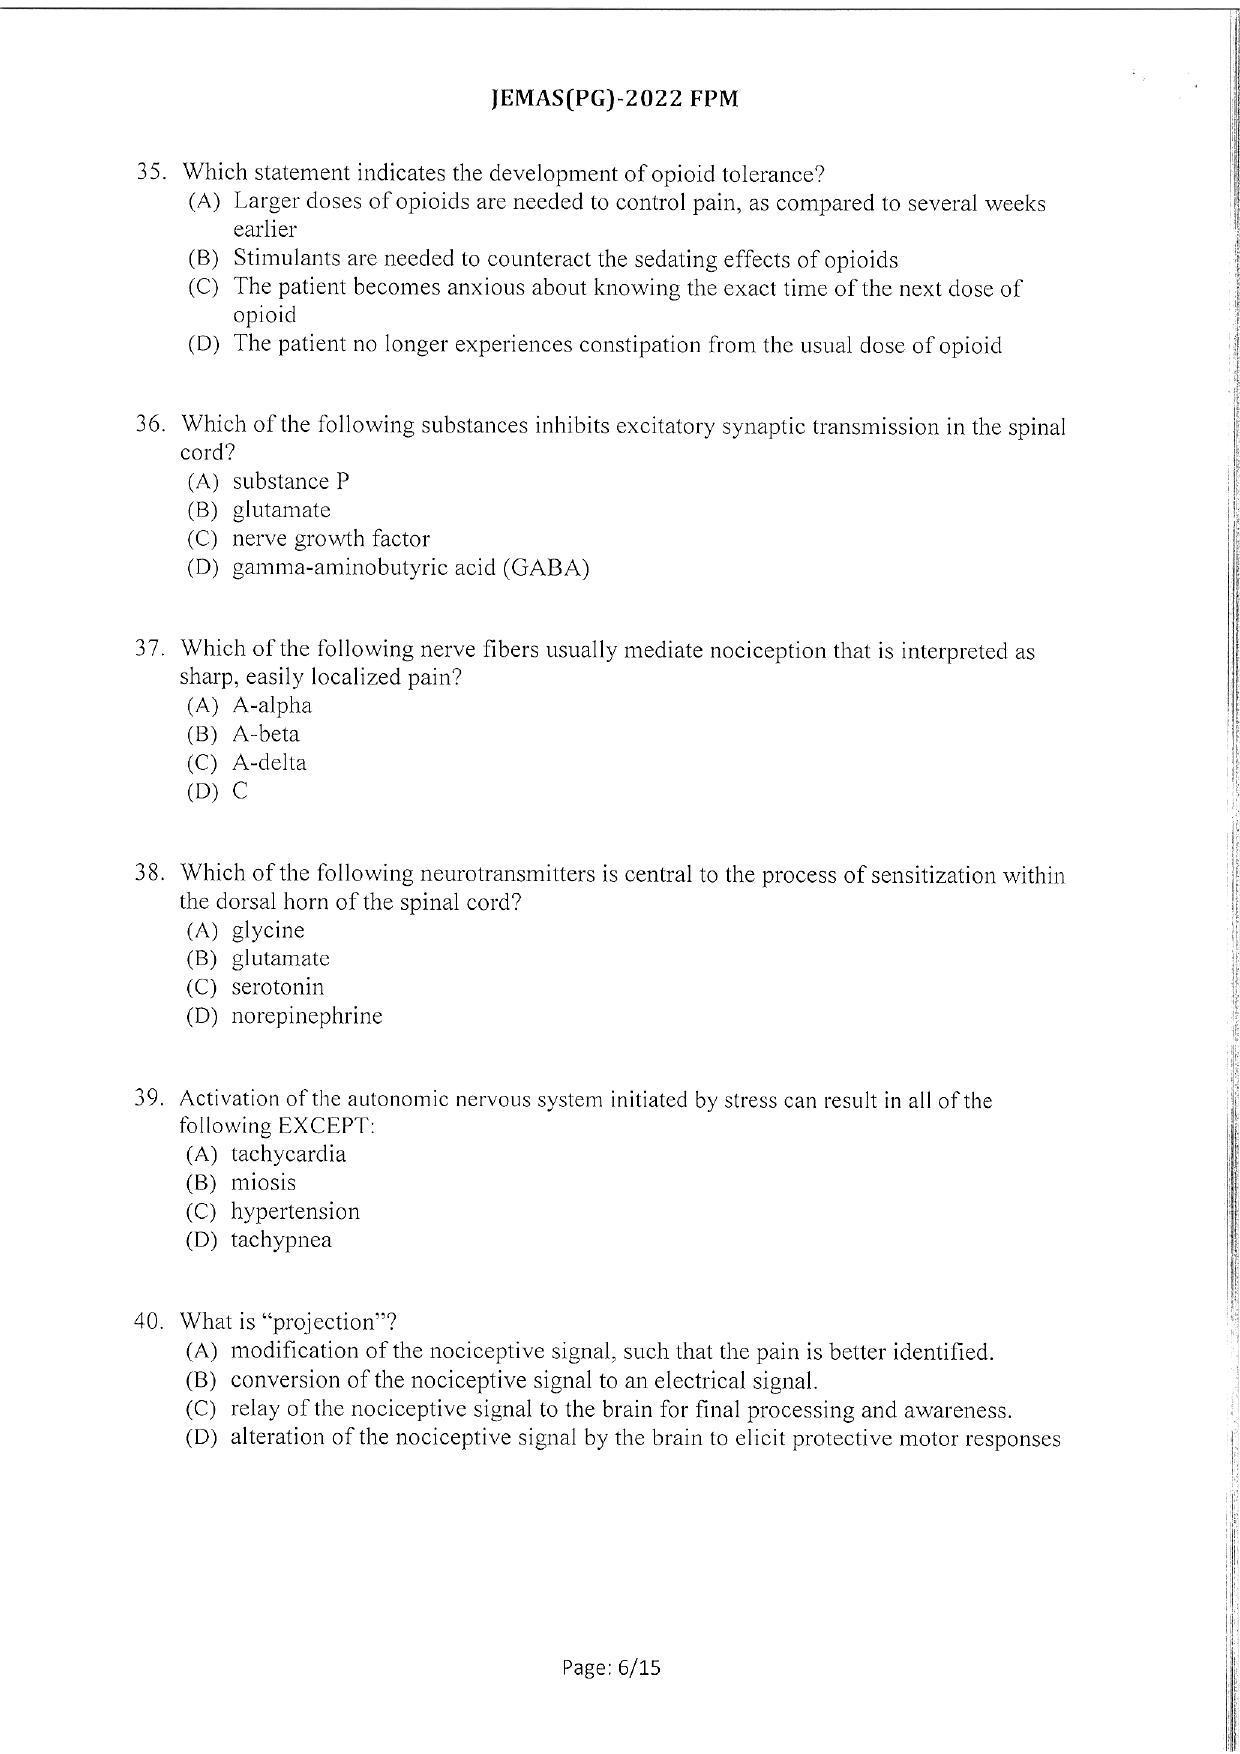 WBJEEB JEMAS (PG) 2022 FPM Question Paper - Page 8